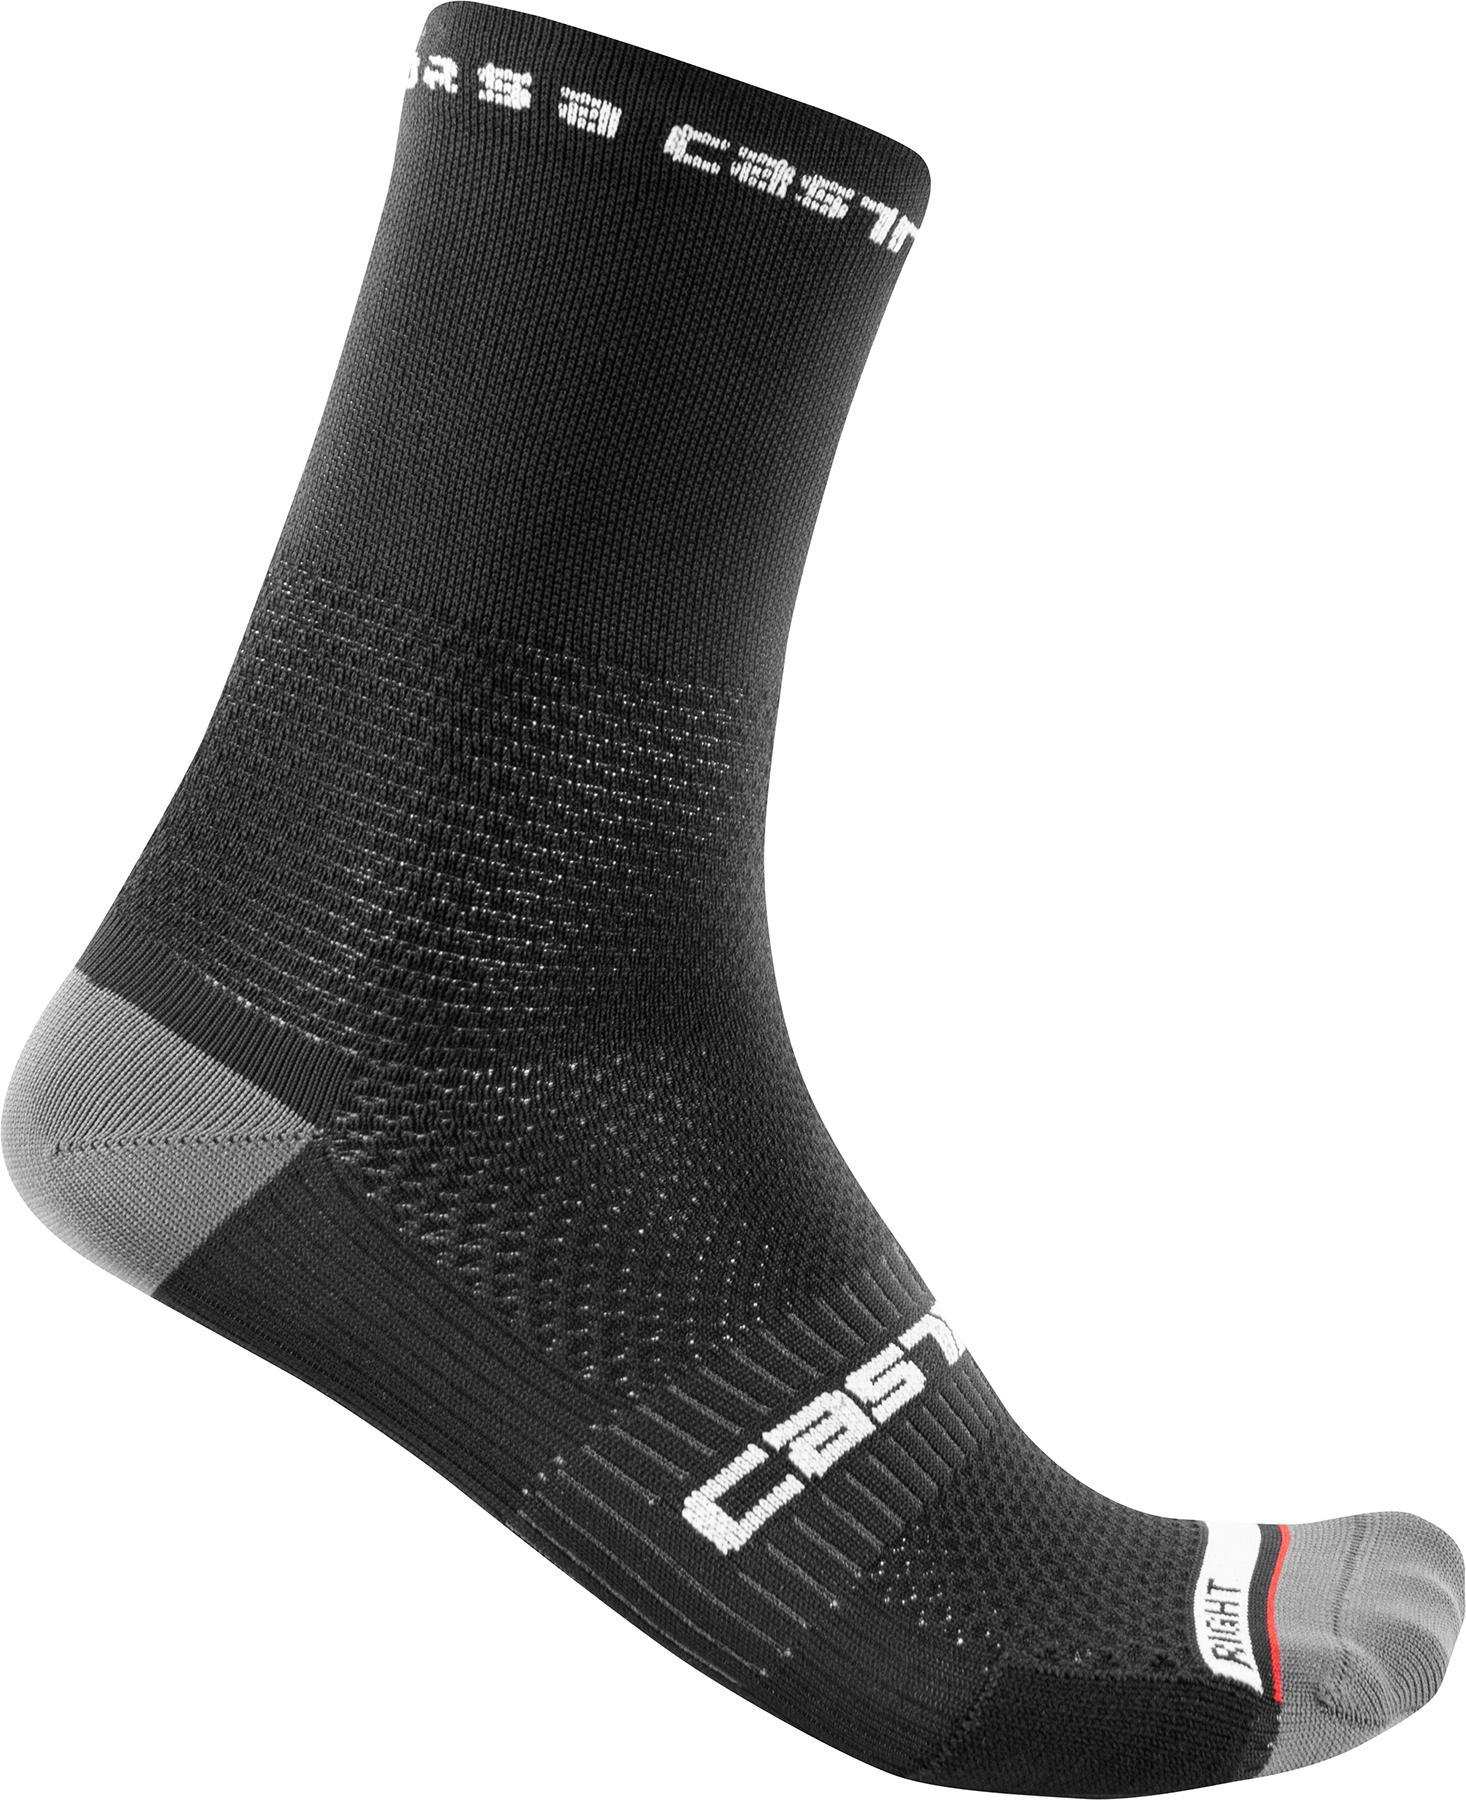 Castelli Rosso Corsa Pro 15 Cycling Socks - Black